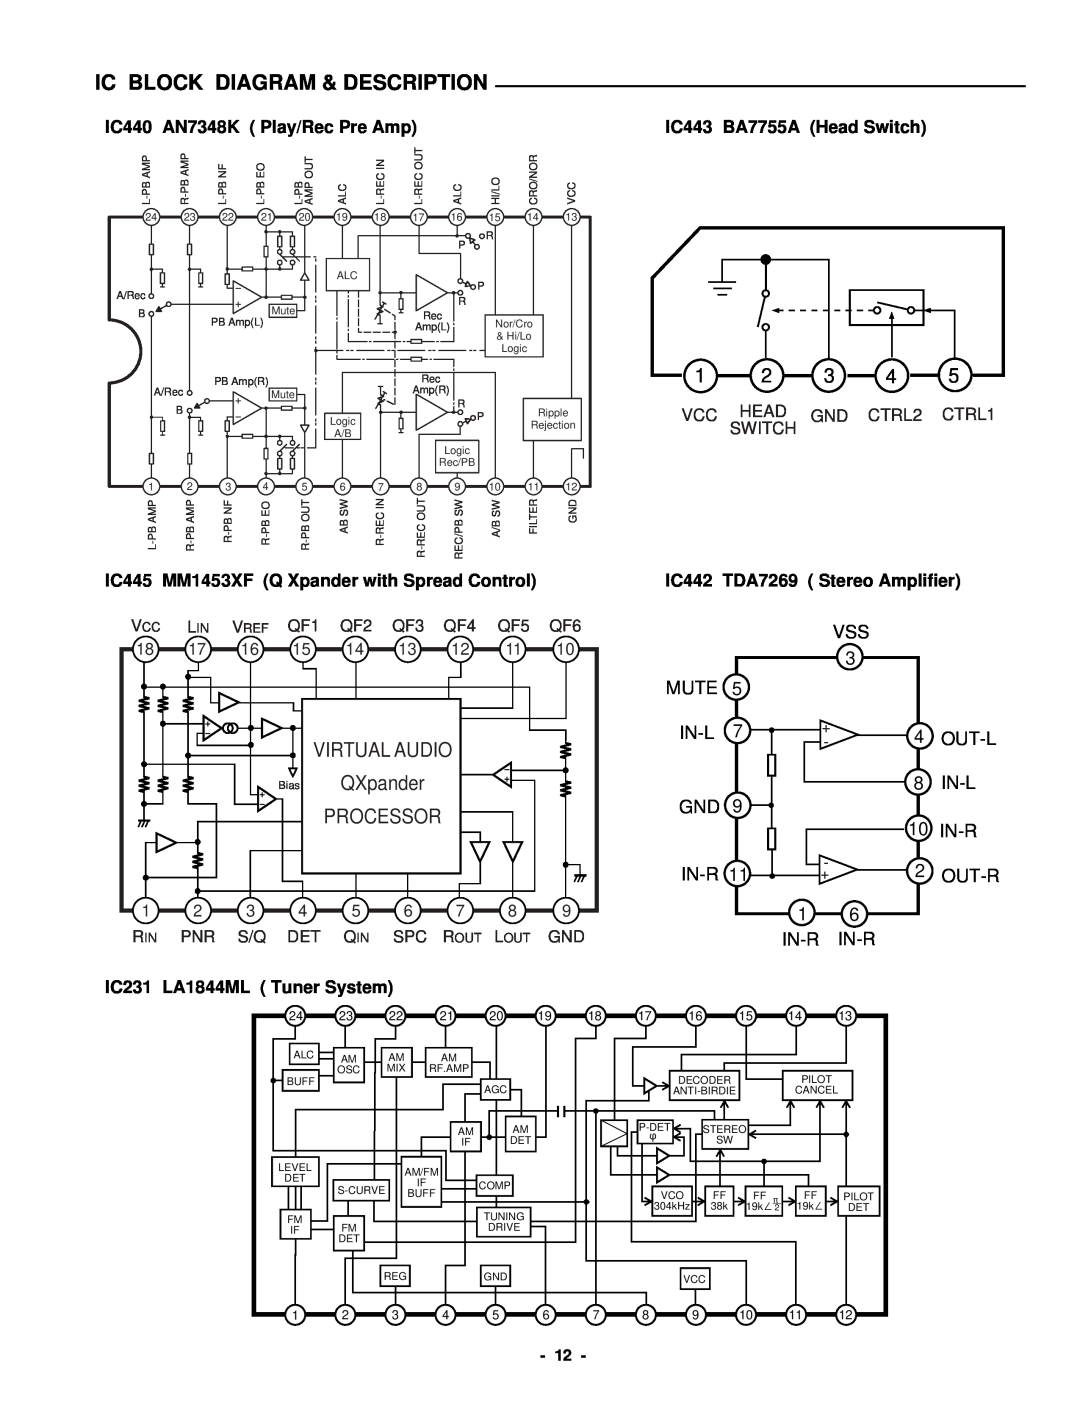 Sanyo DC-DA370 service manual Ic Block Diagram & Description, QXpander 